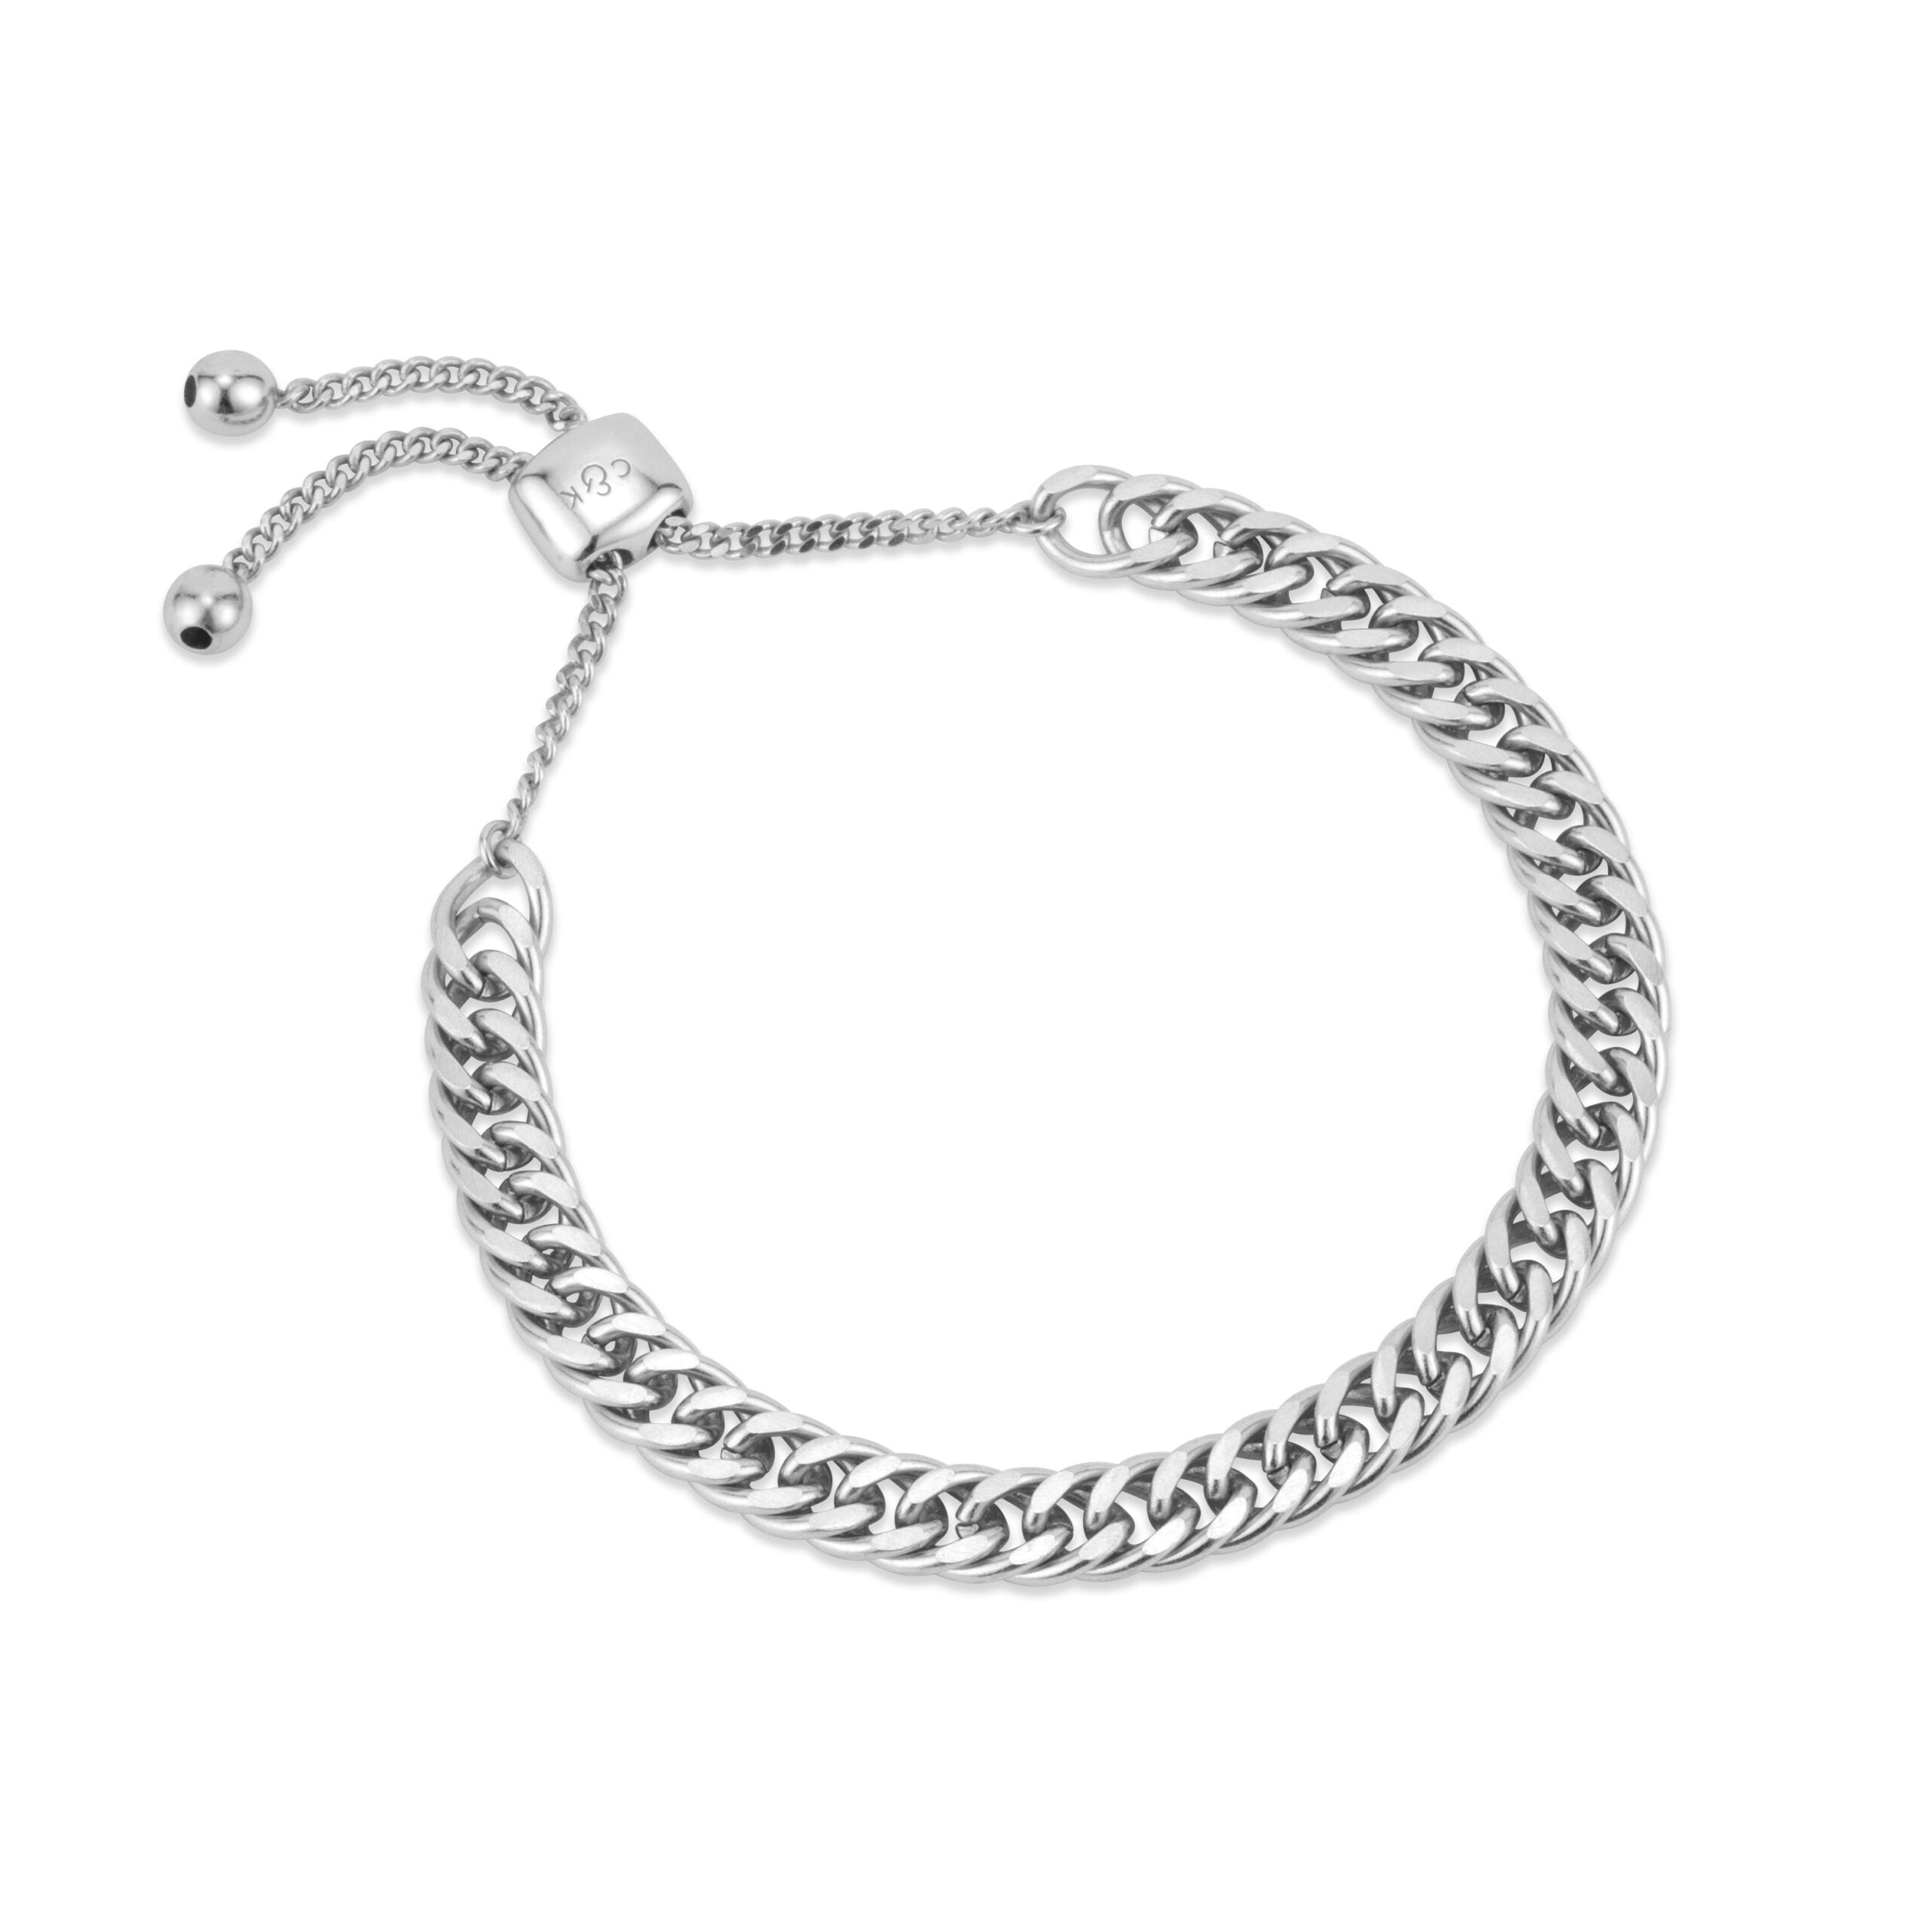 Maharani Men's Silver Open Bracelet, Charlotte's Web Jewelry